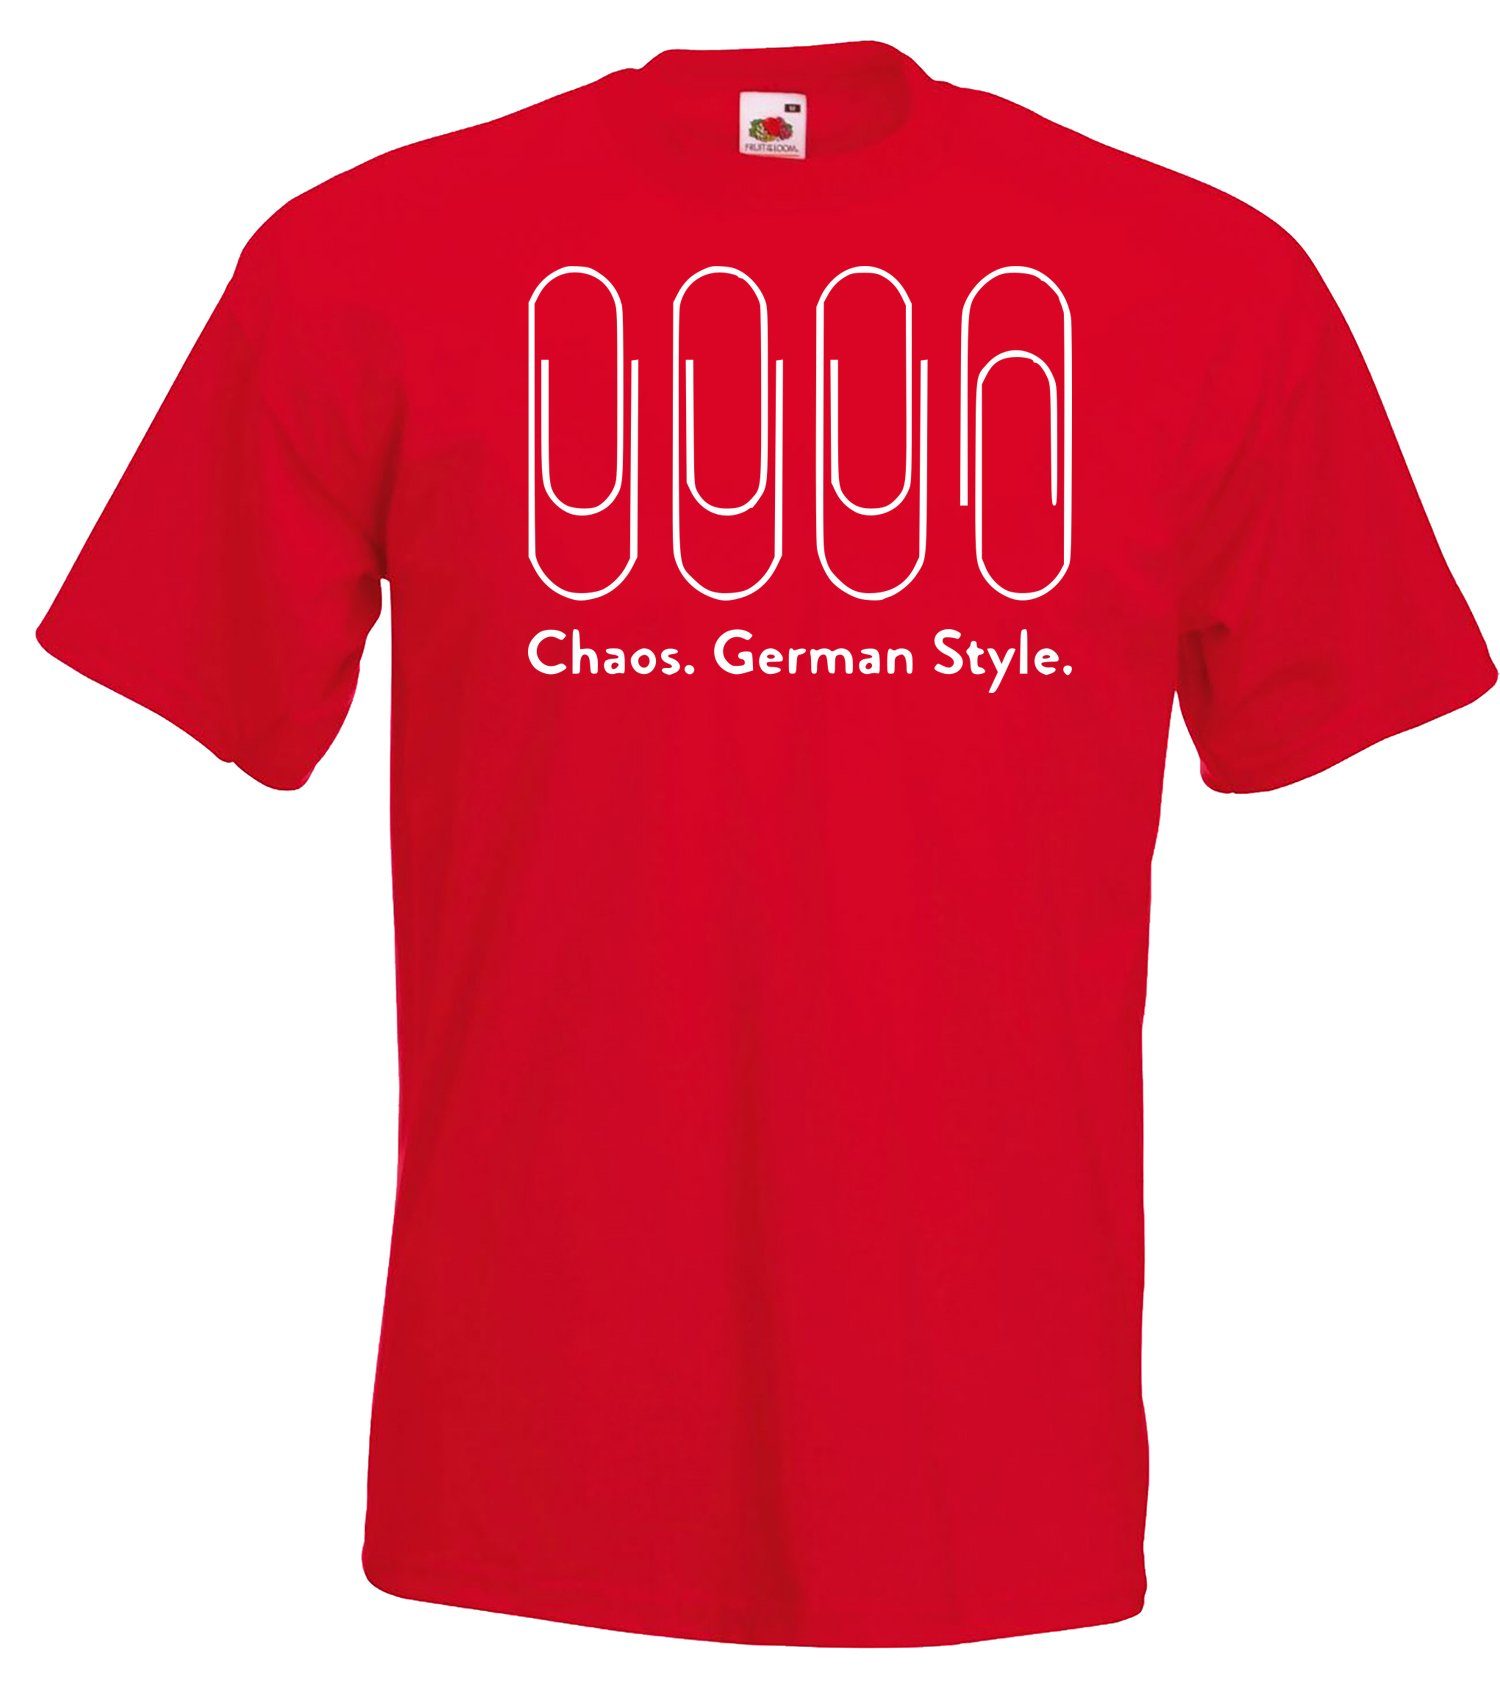 T-Shirt mit Designz Herren T-Shirt German Youth Style Chaos Rot Frontprint lustigen